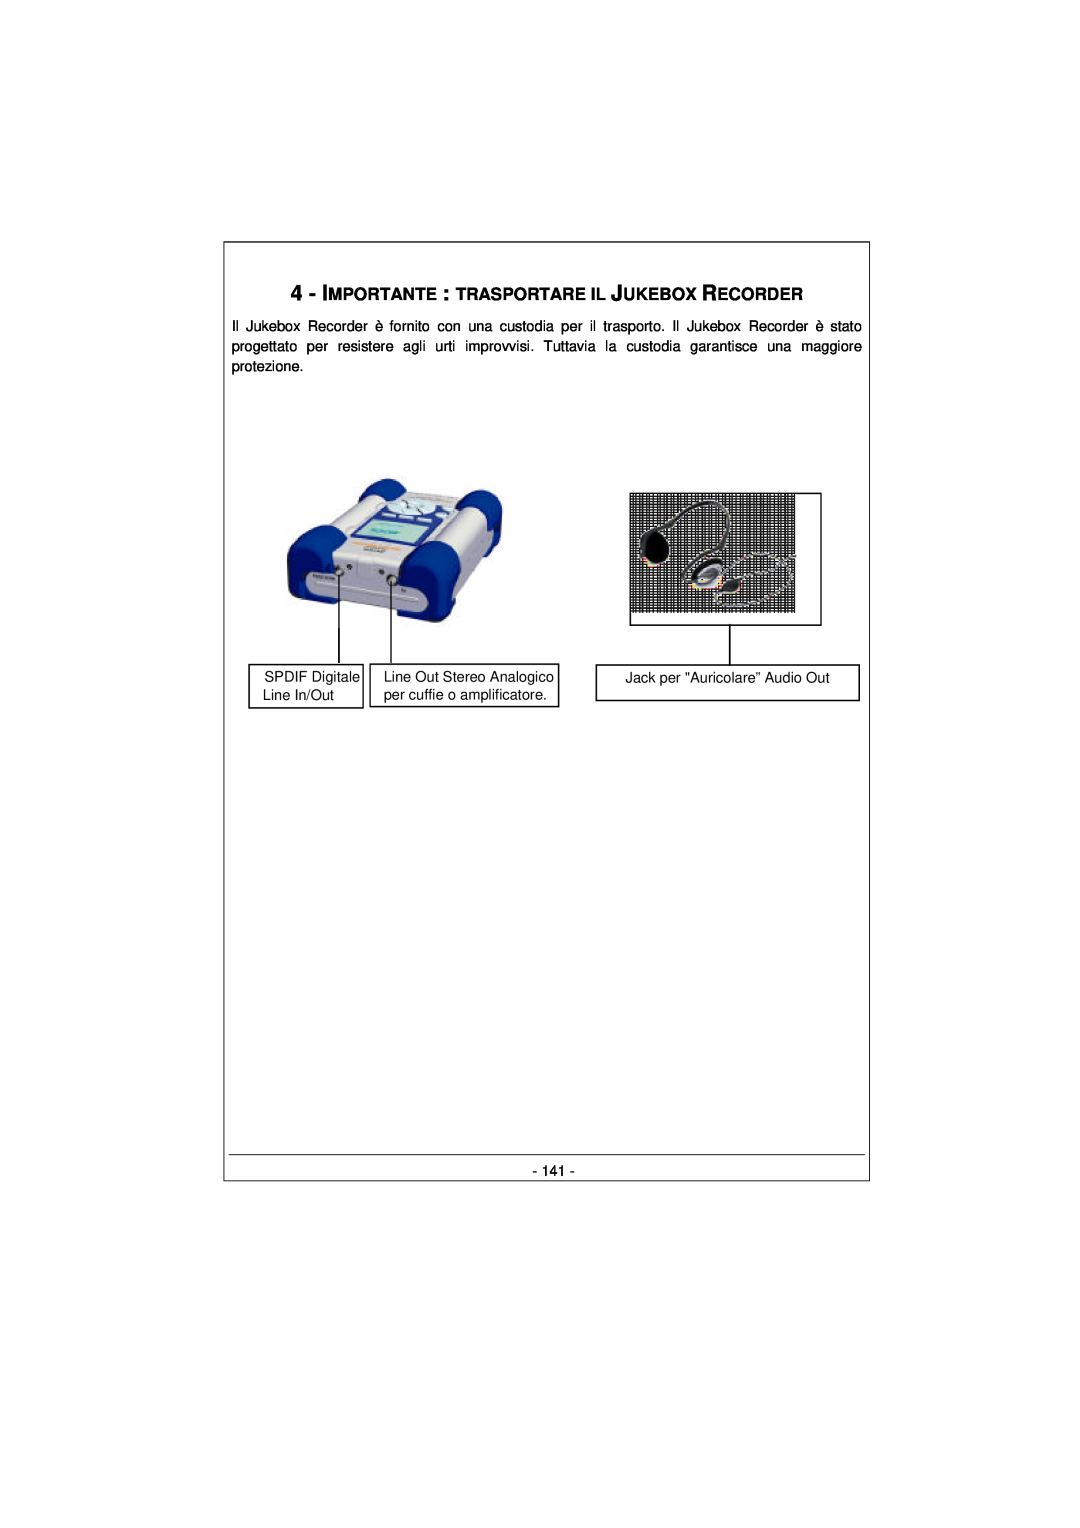 Archos 100628 manual Importante Trasportare Il Jukebox Recorder, SPDIF Digitale Line In/Out, Jack per Auricolare” Audio Out 